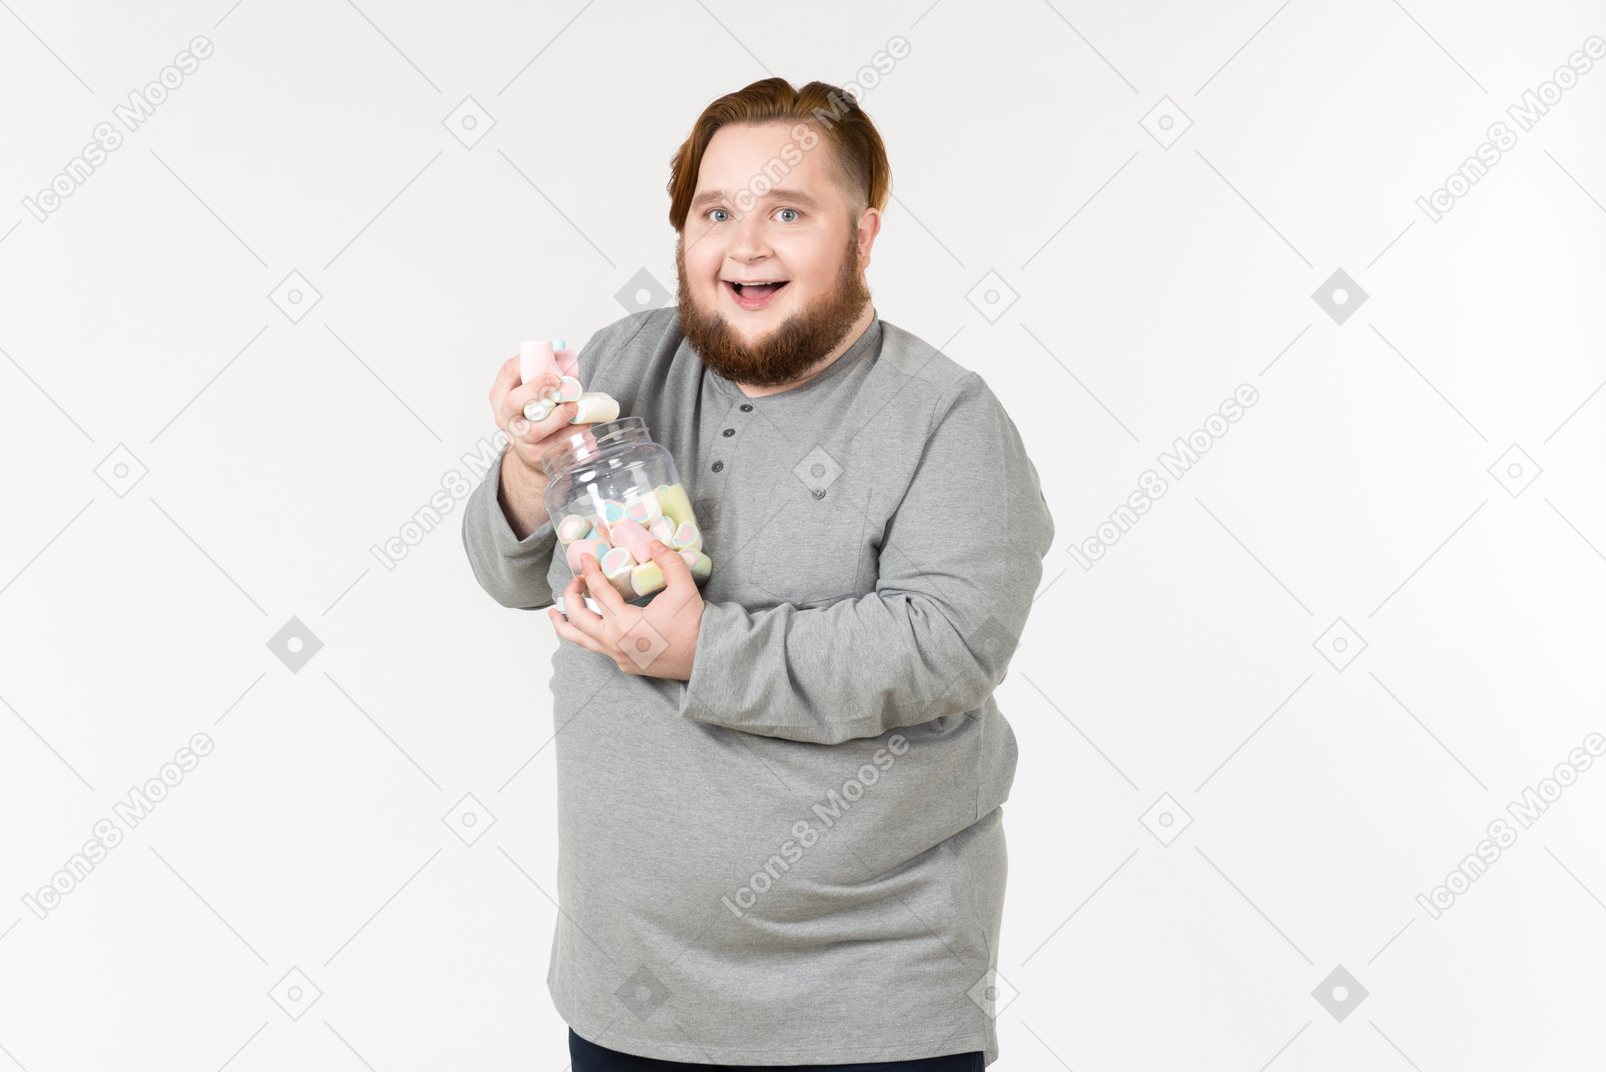 Big bearded guy eating marshmallows with eyes closed